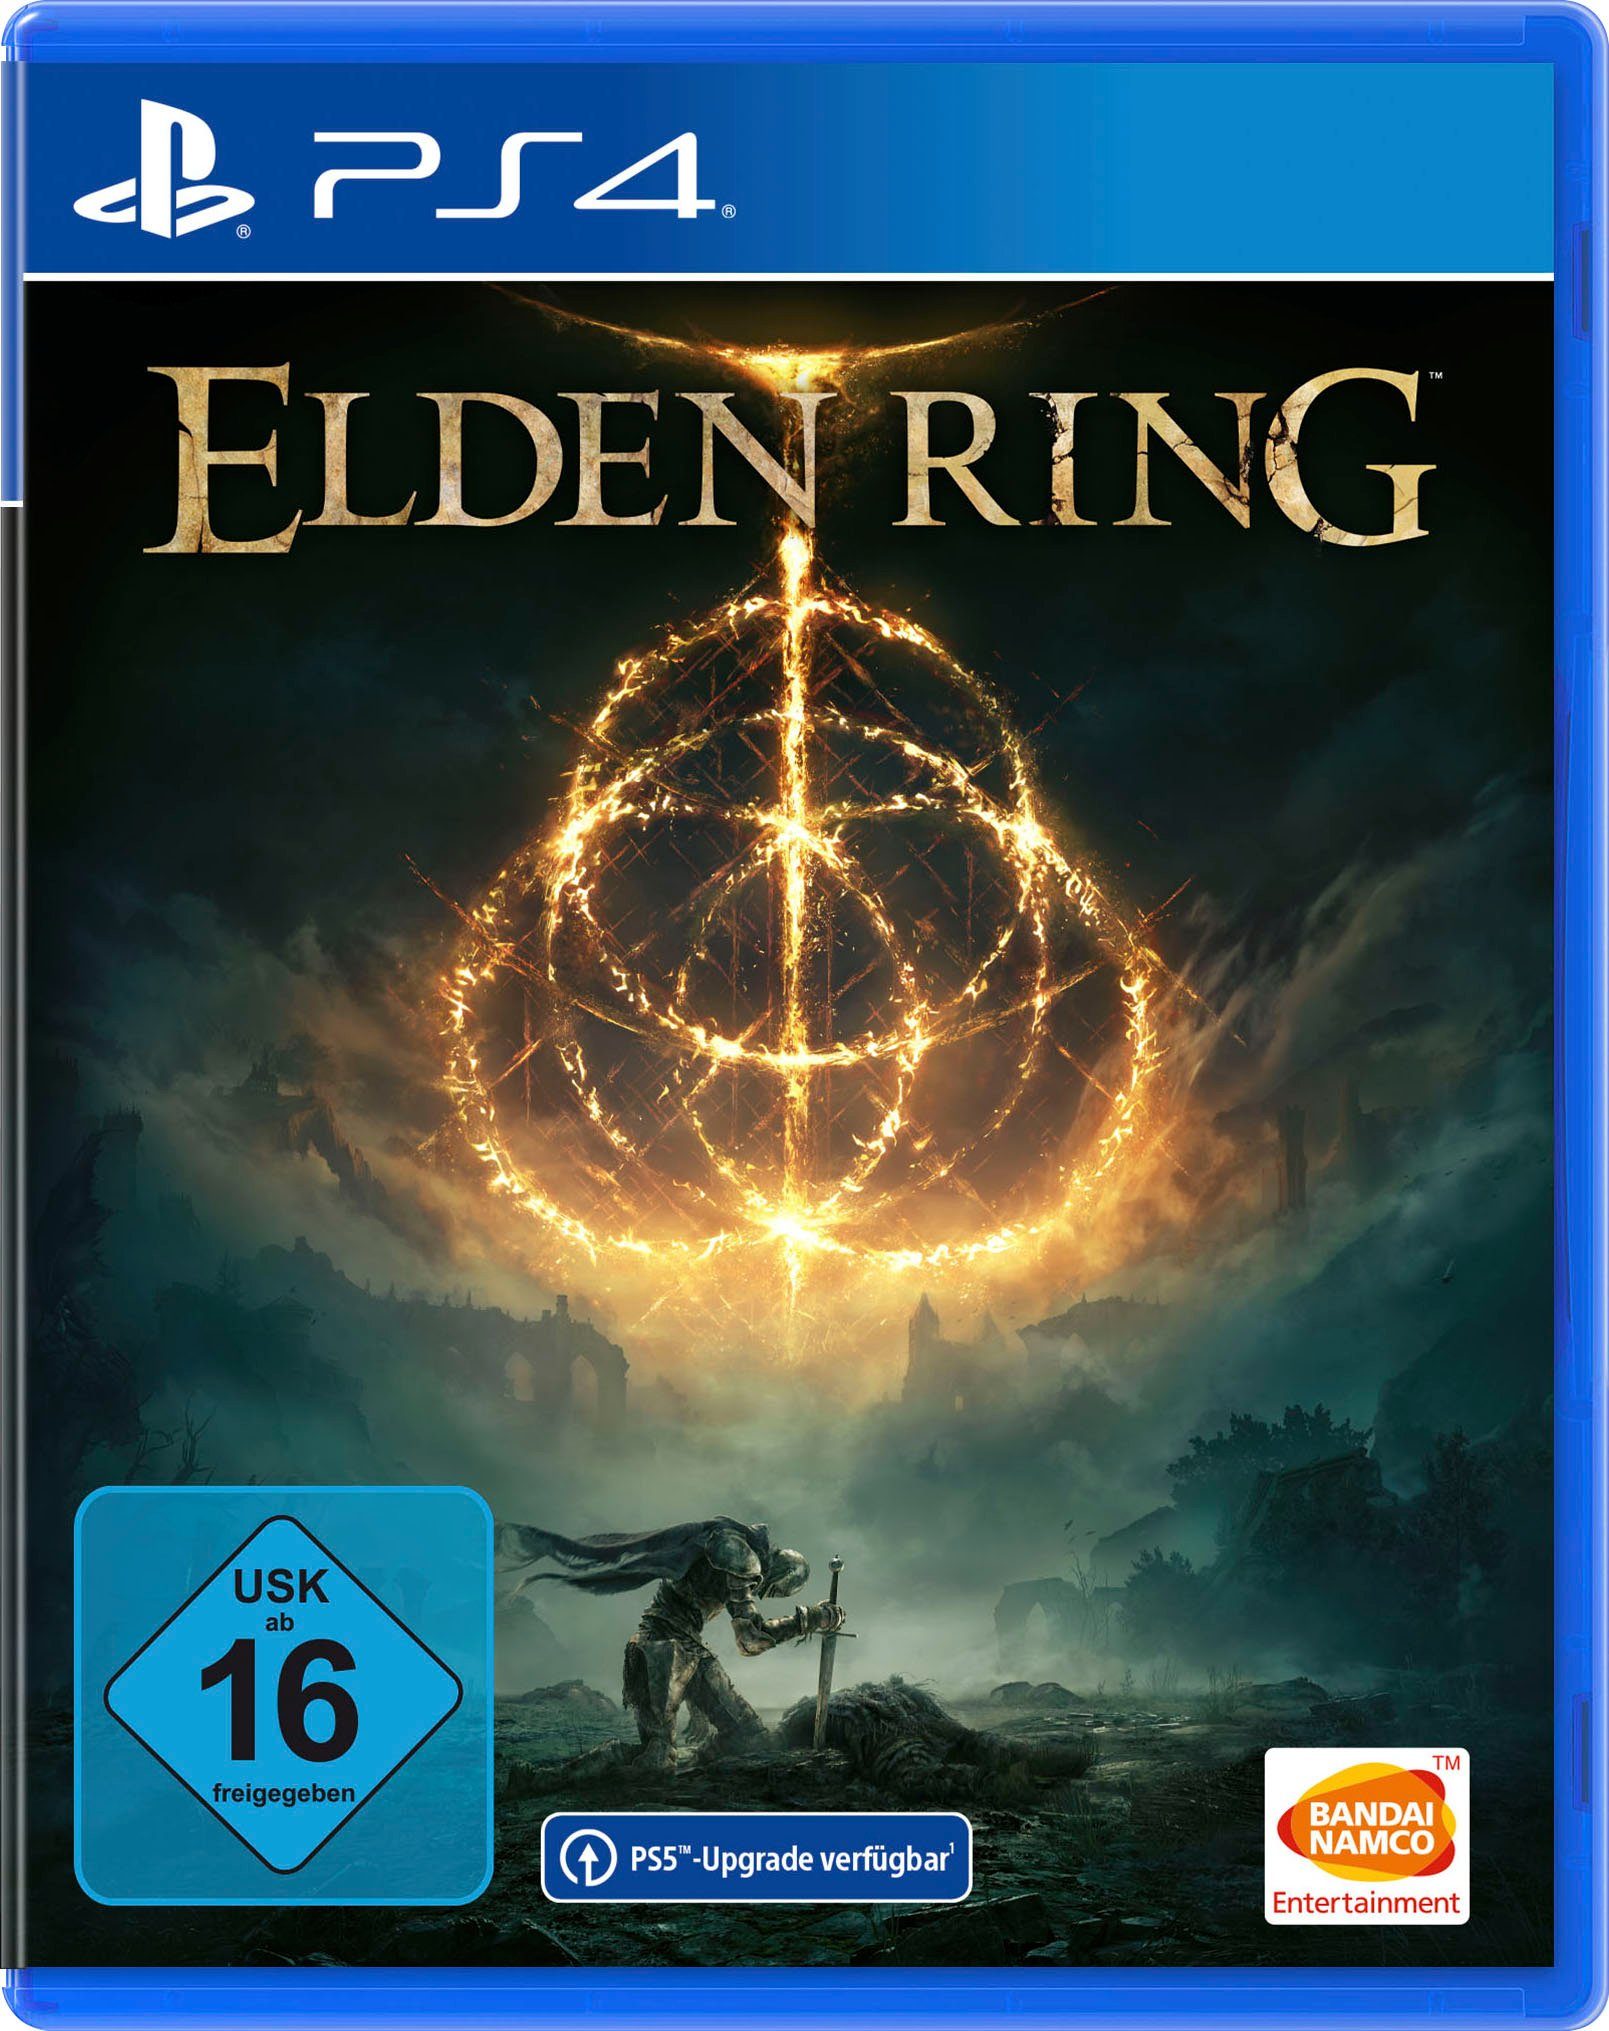 4 Ring Bandai PlayStation Elden